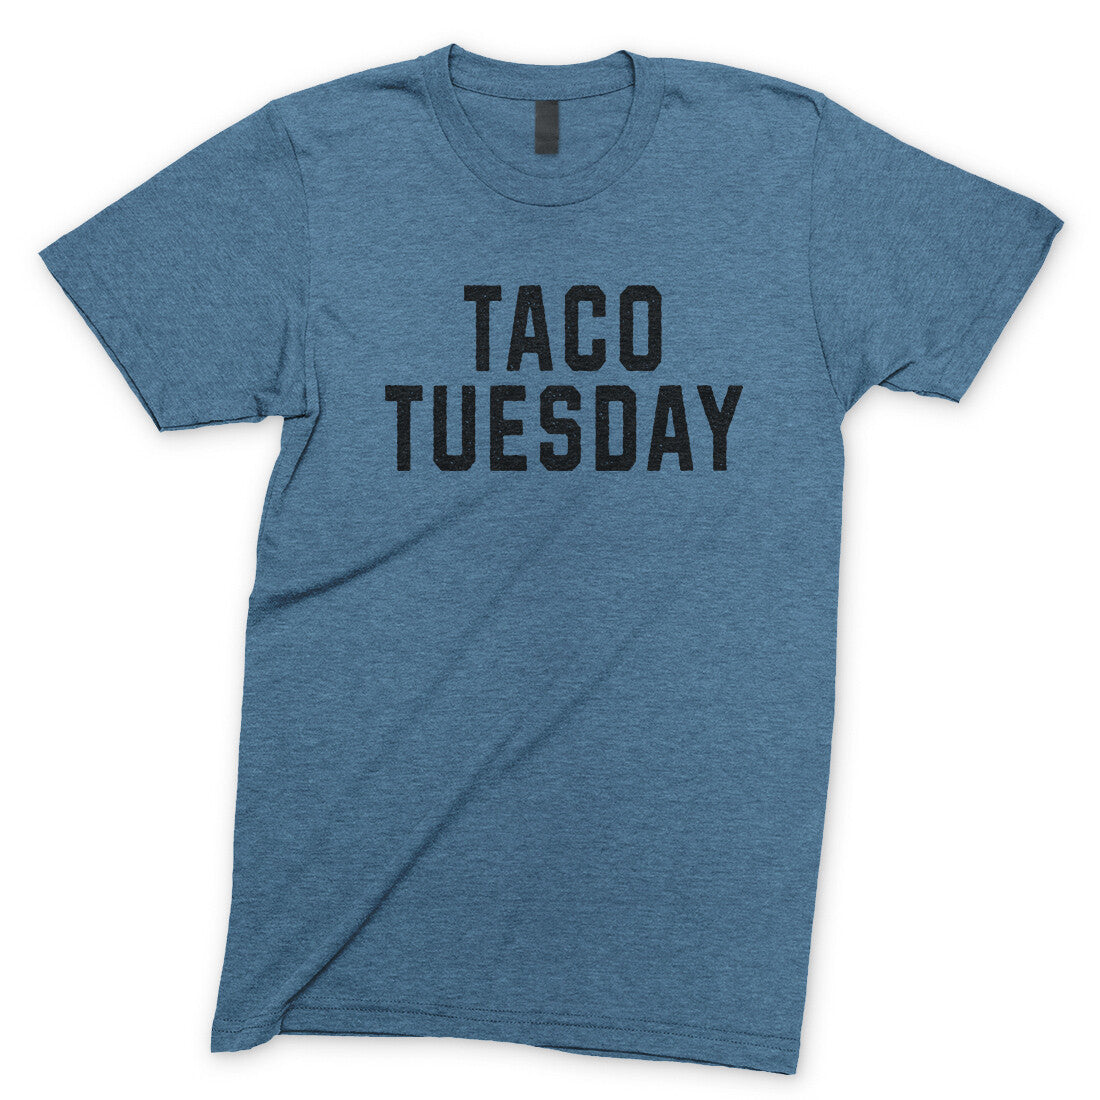 Taco Tuesday in Heather Indigo Color